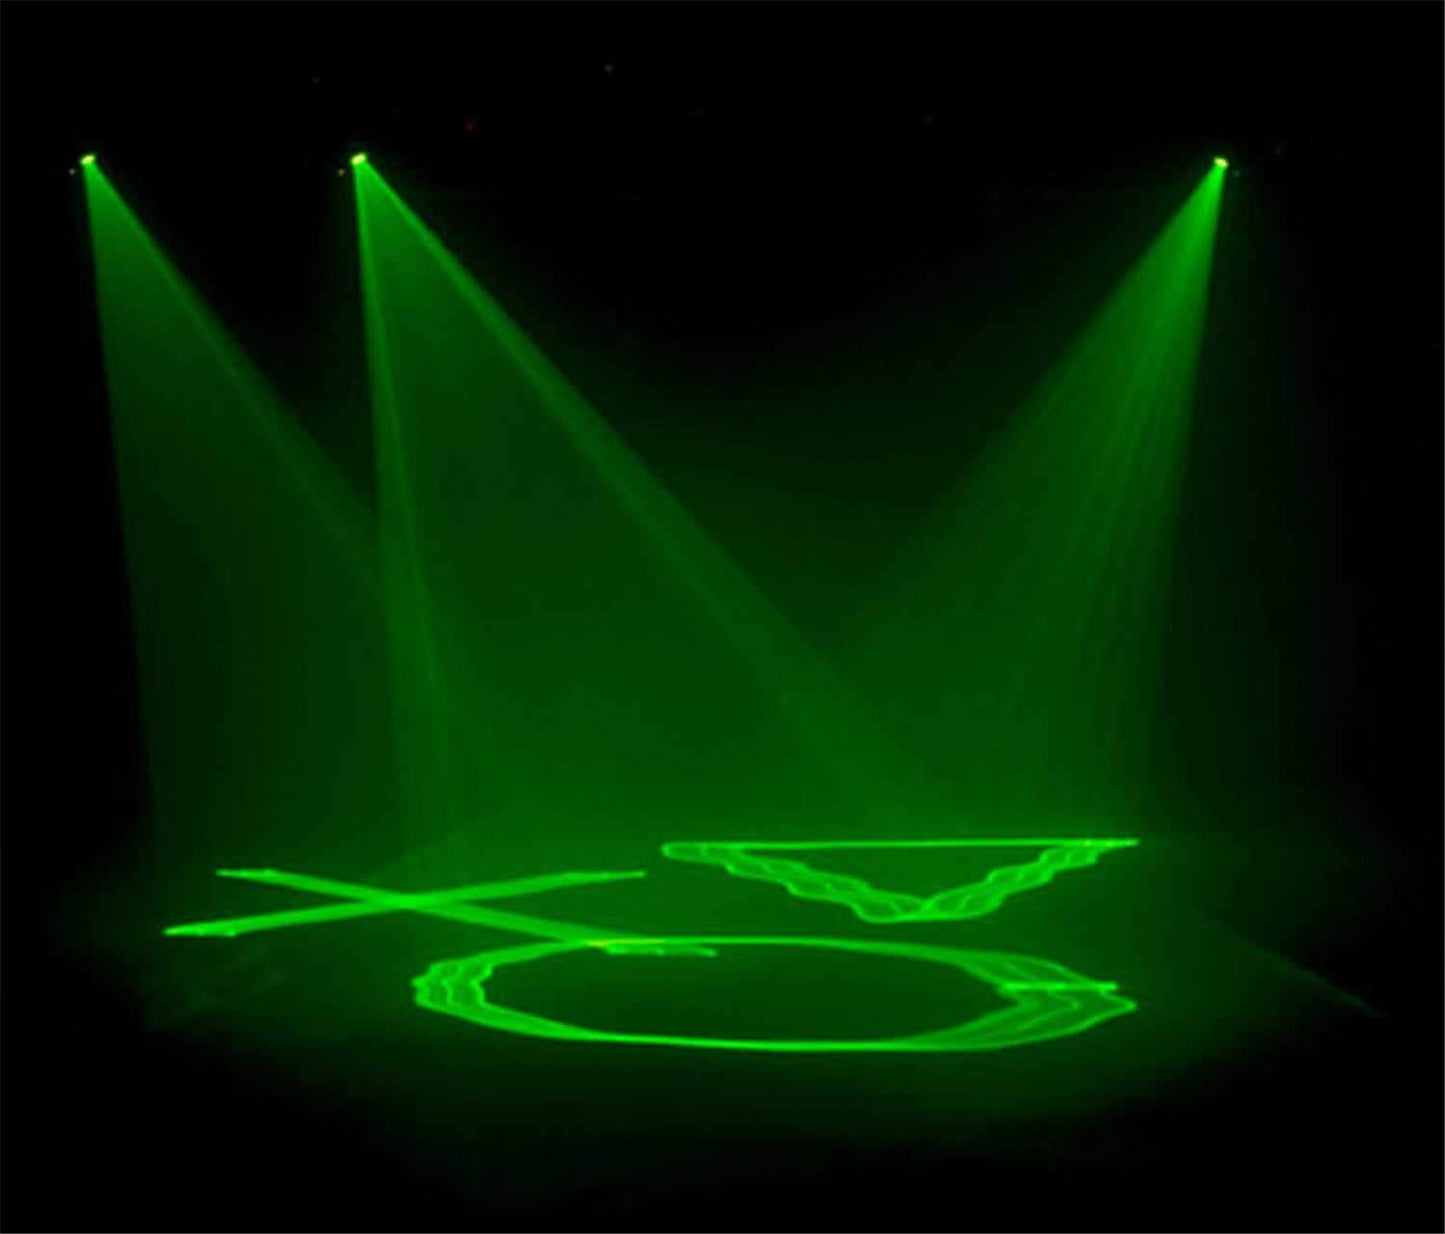 ADJ American DJ Micro Sky Mini Green Laser Effect Fixture - PSSL ProSound and Stage Lighting